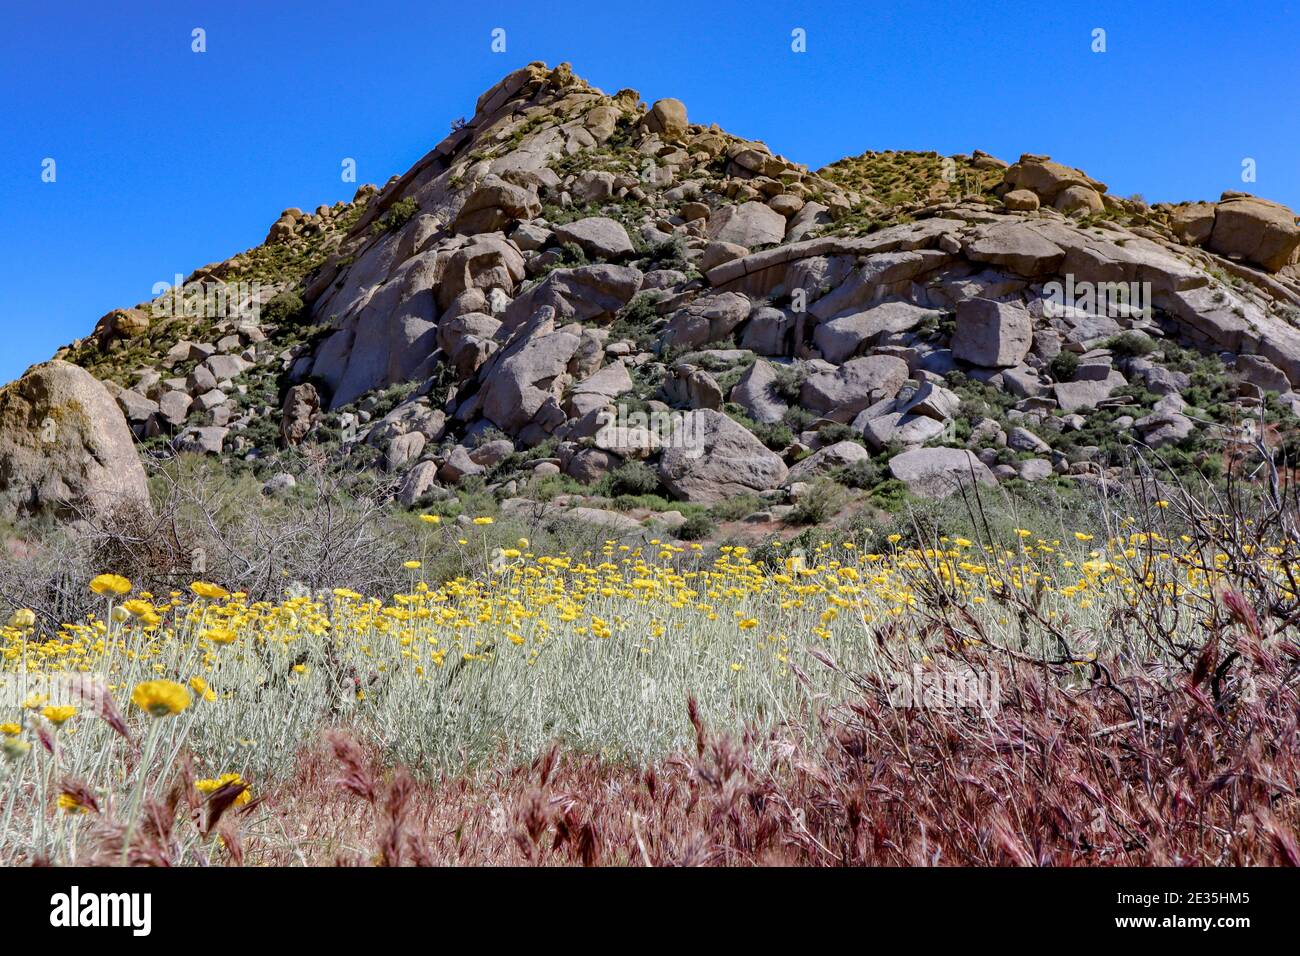 Phoenix Desert Scene With Blooming Flowers Stock Photo